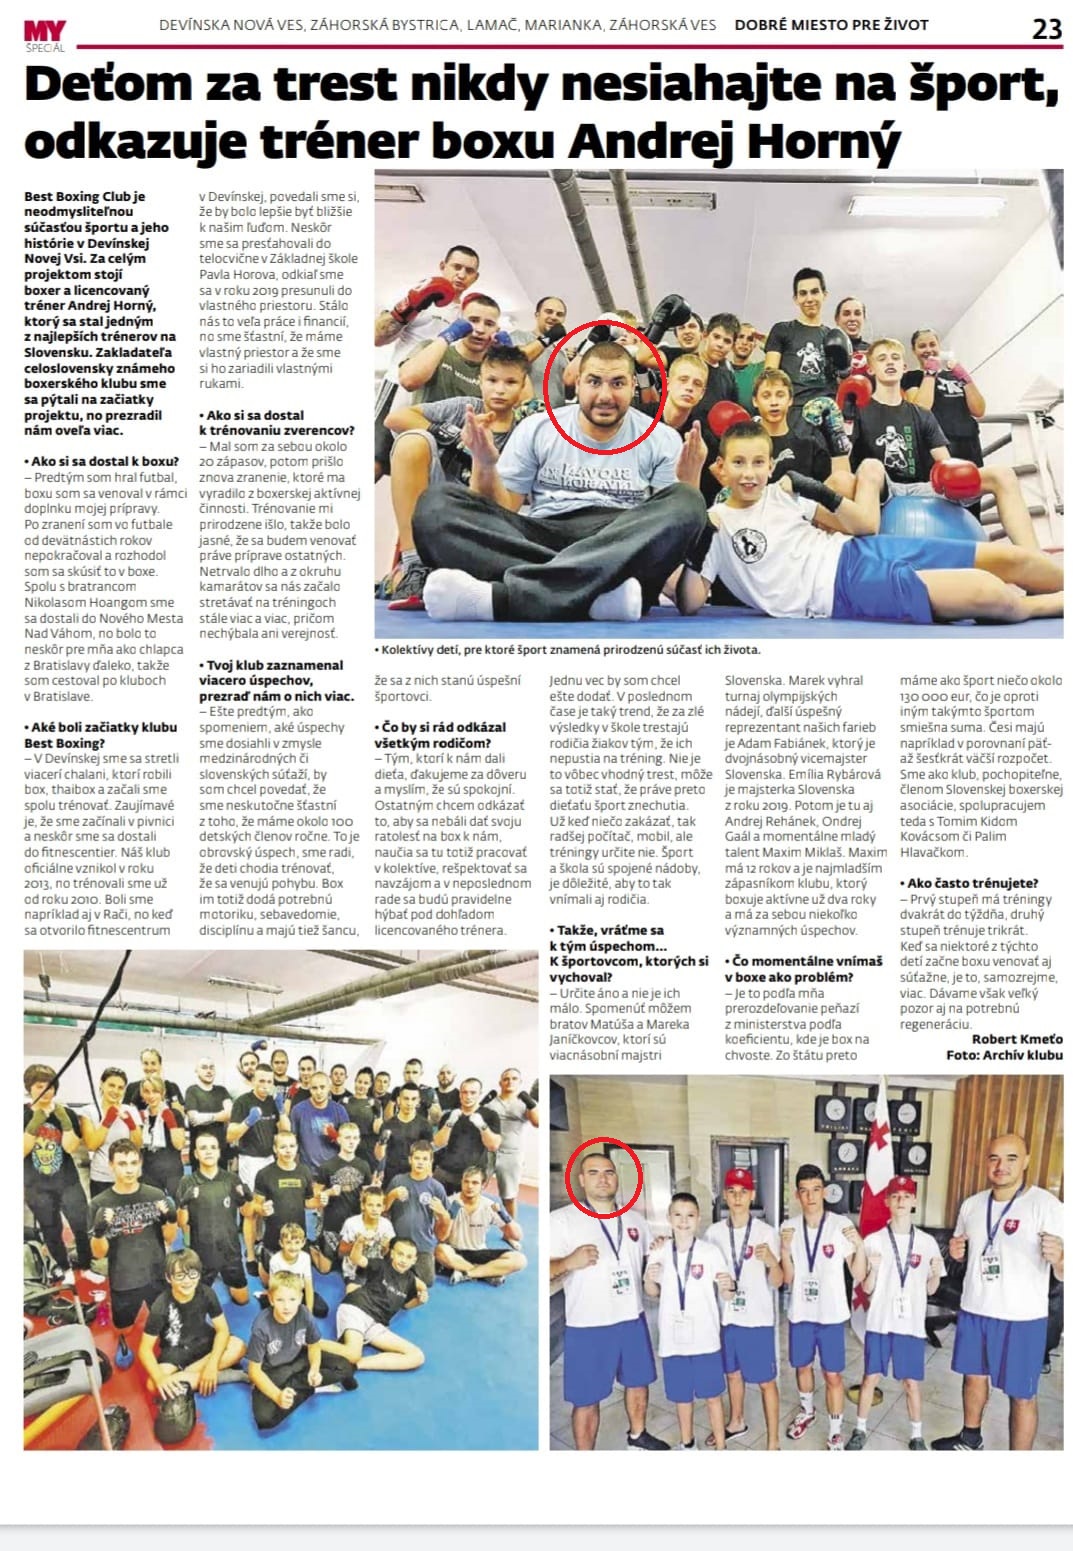 Rozhovor s Andrejom Horným o jeho pôsobení v Best Boxing Clube v novinách